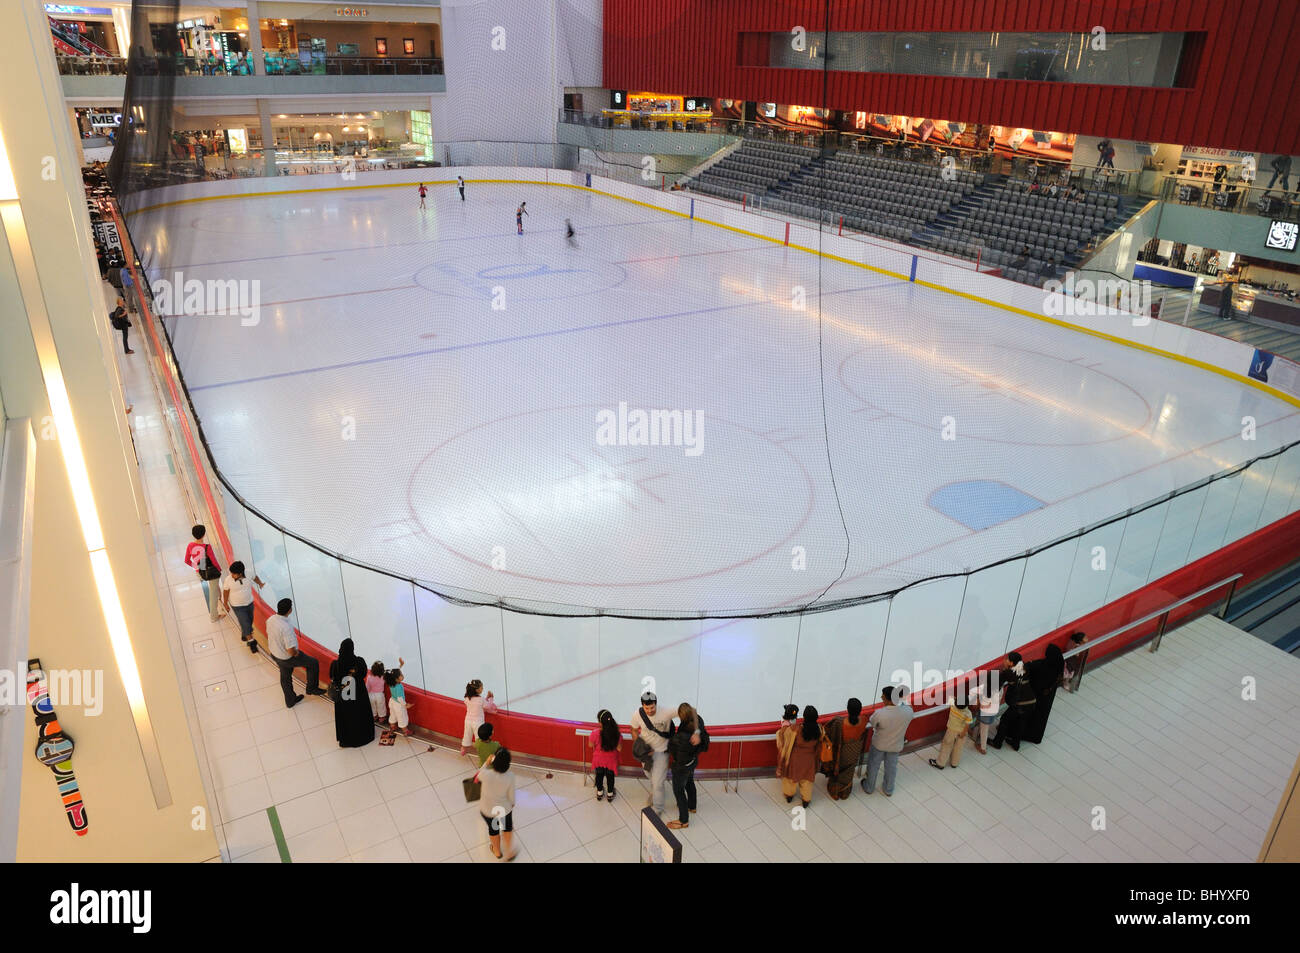 Ssurvivor: Dubai Mall Ice Rink Offers